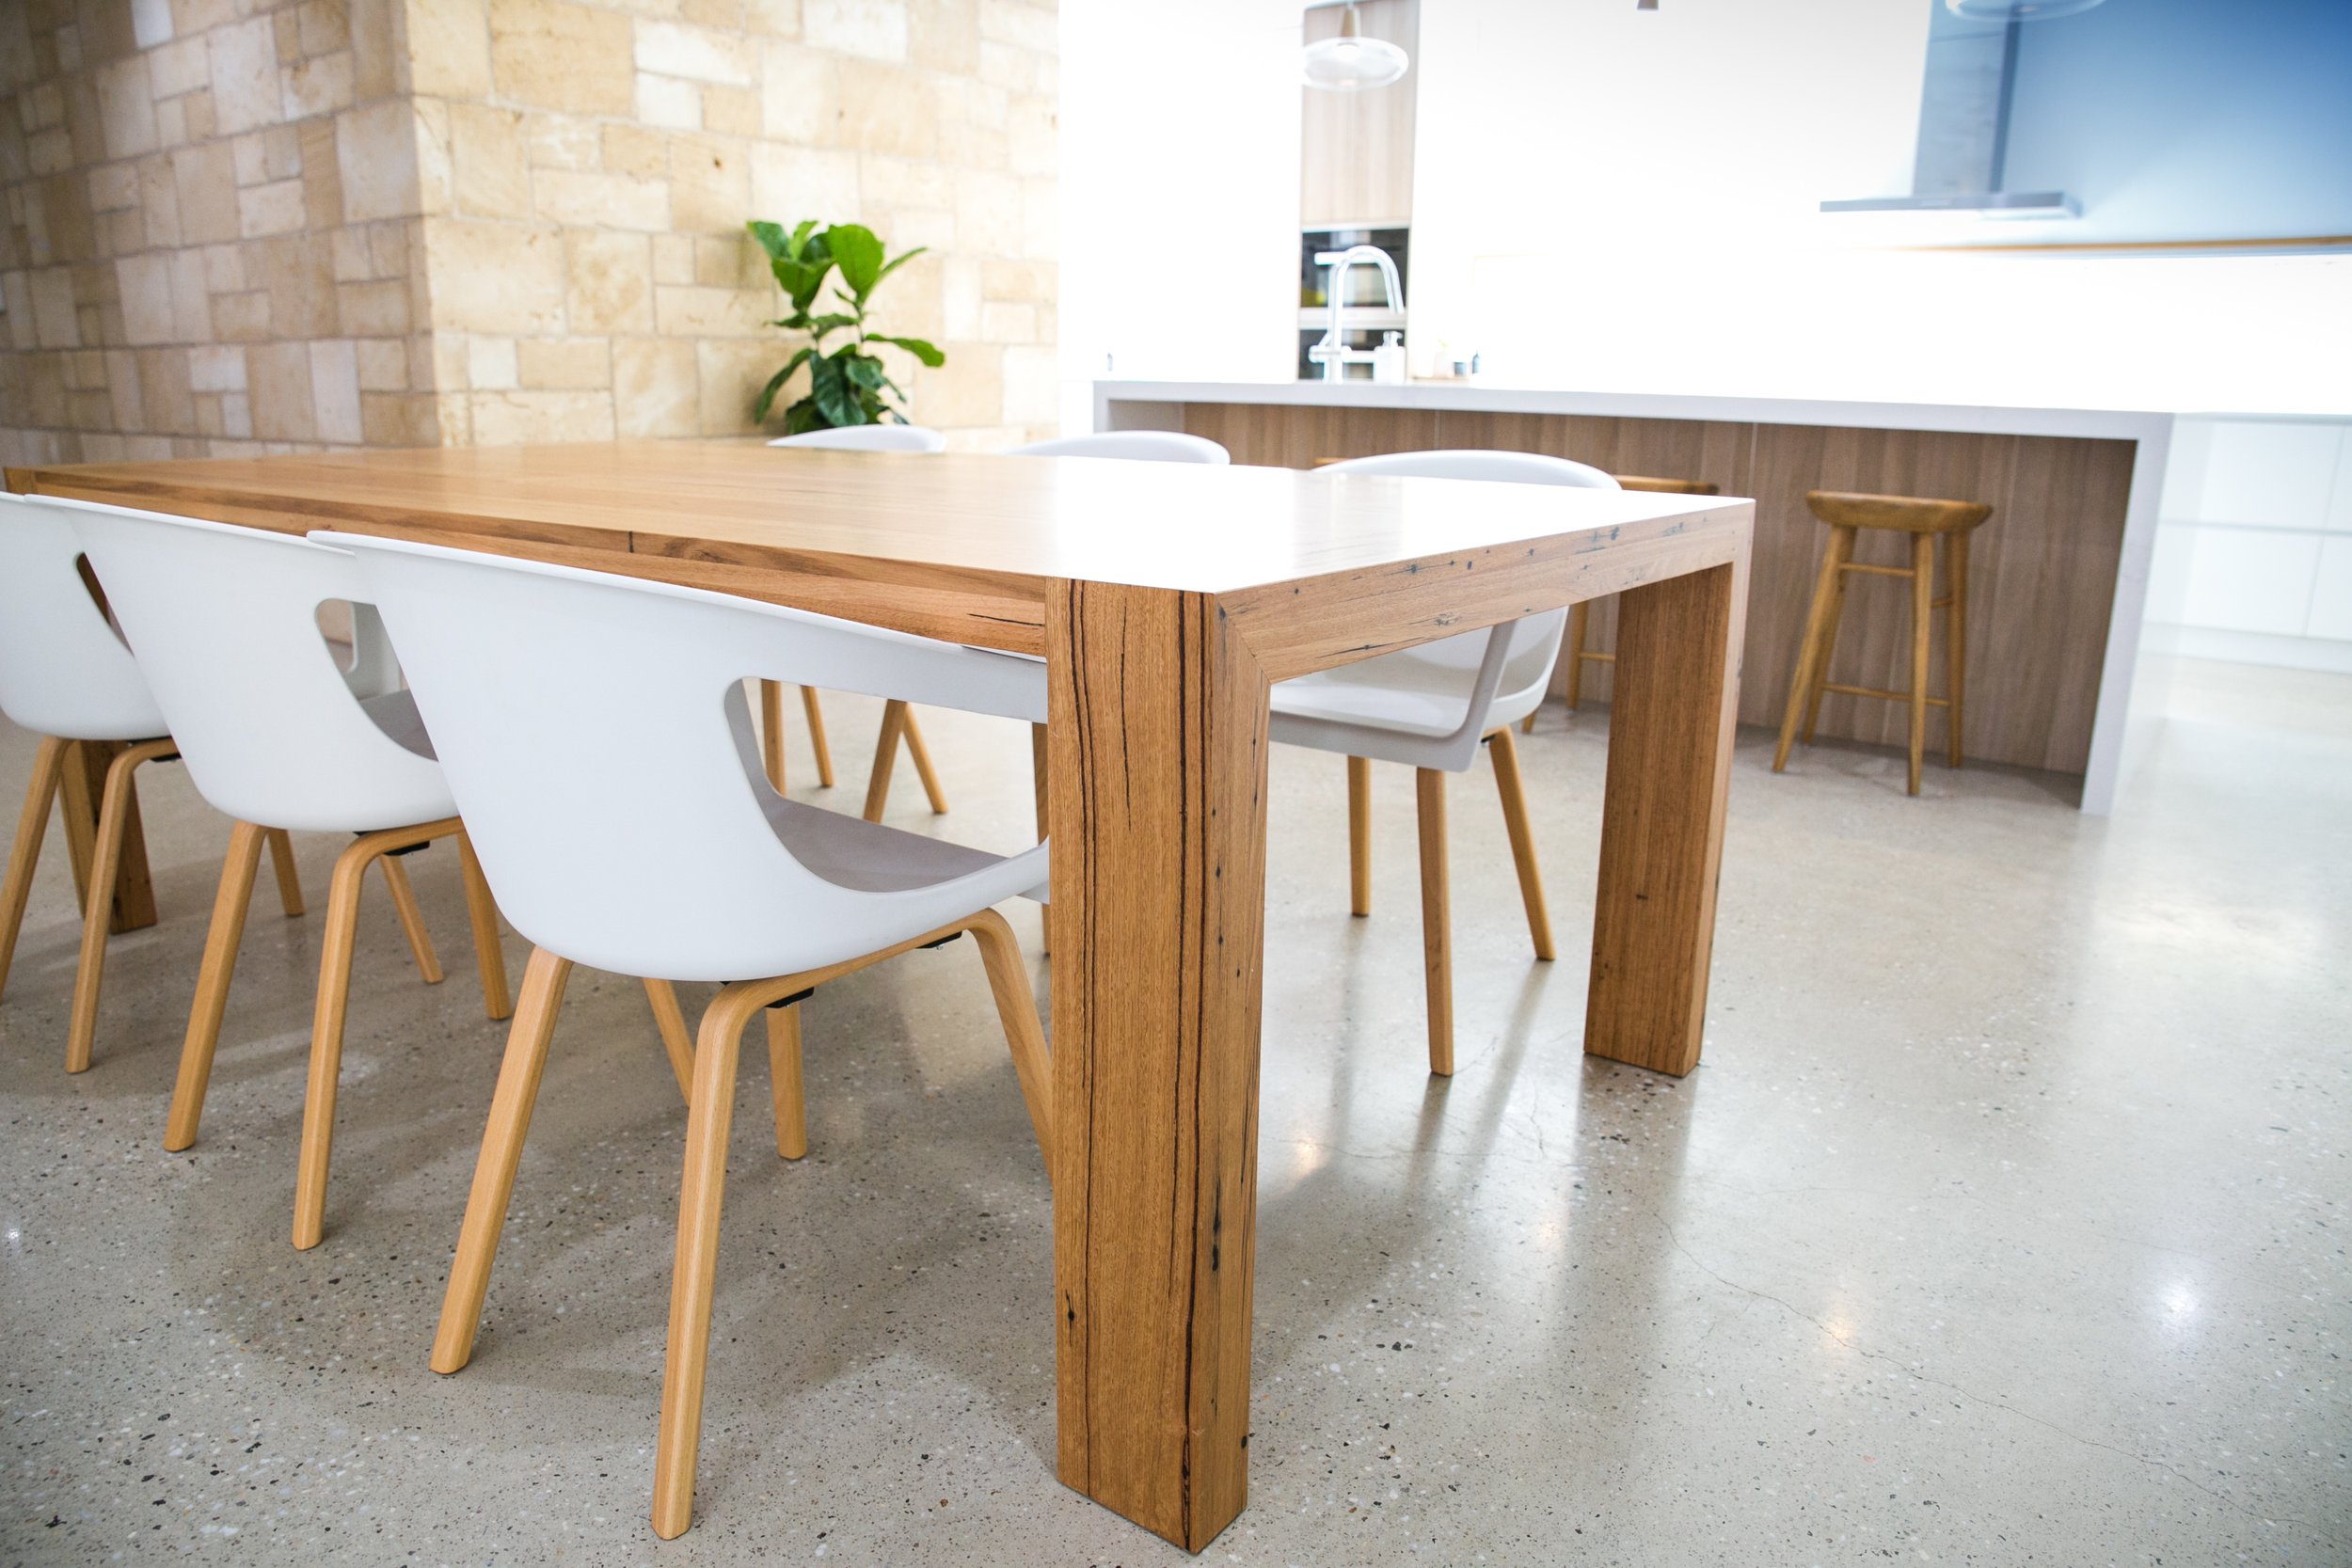 Kirsten - Bespoke Dining Table - Mitred Breadboard Legs - Recycled Messmate Timber - 02.jpg